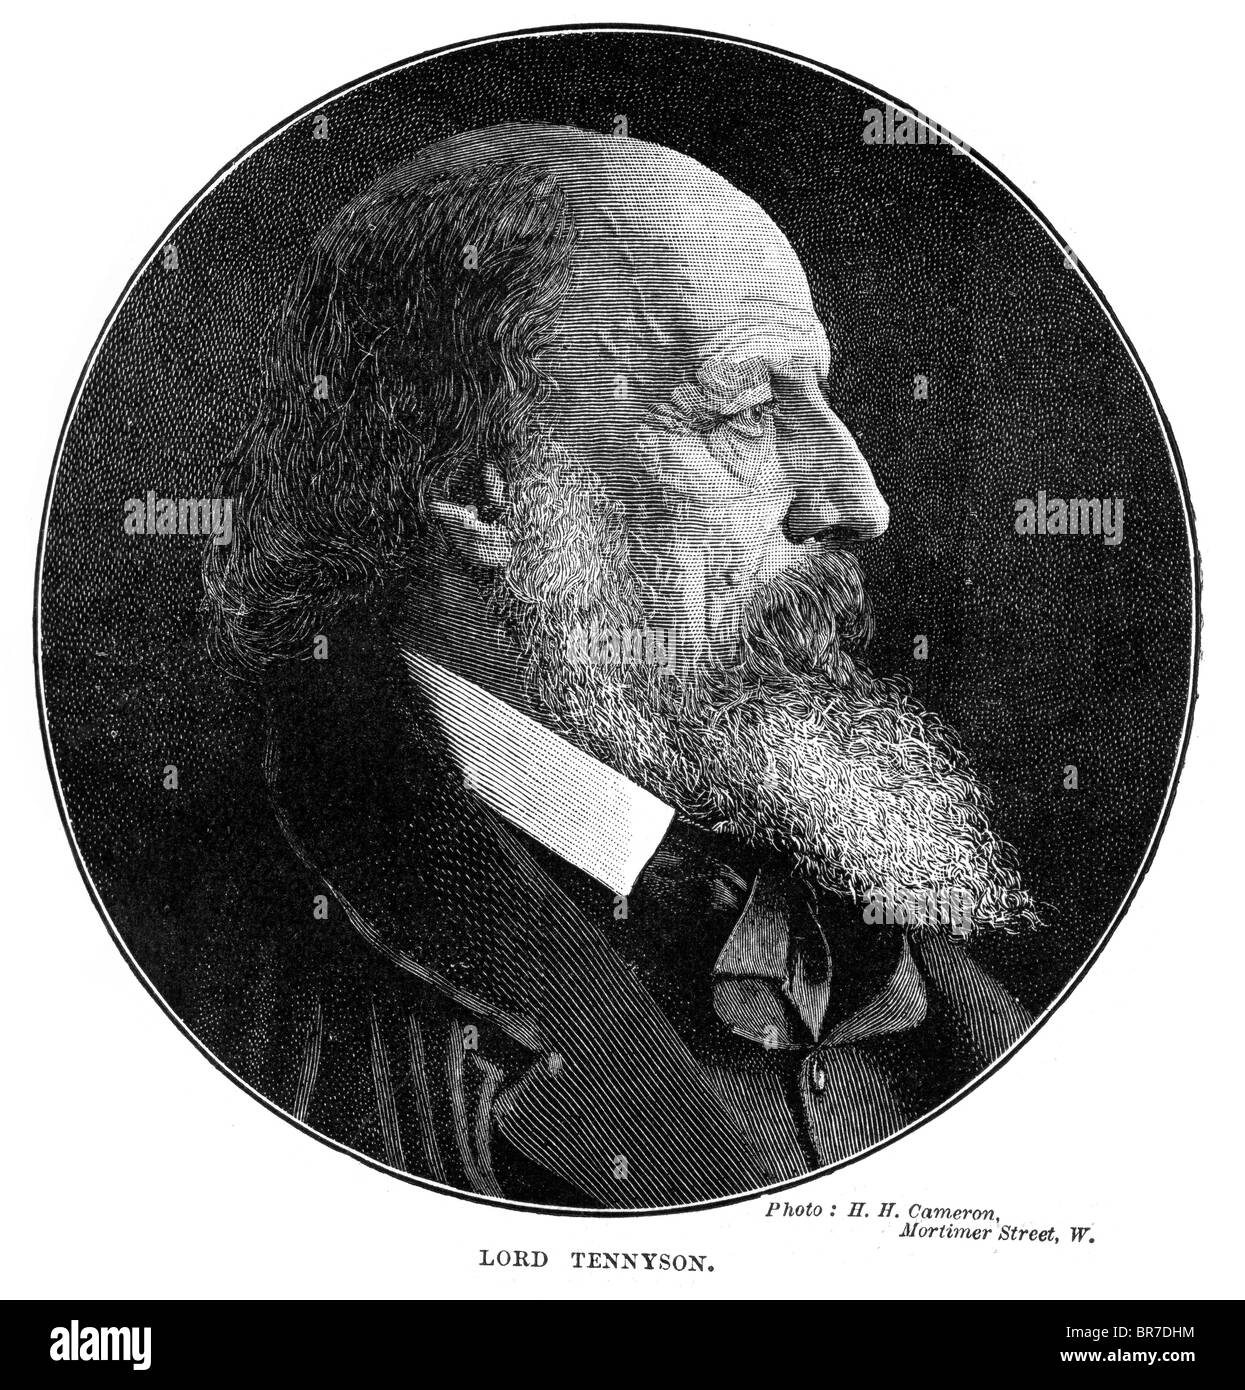 Alfred Tennyson, 1. Baron Tennyson, FRS (1809-1892), besser bekannt als "Alfred, Lord Tennyson" Poet Laureate Stockfoto